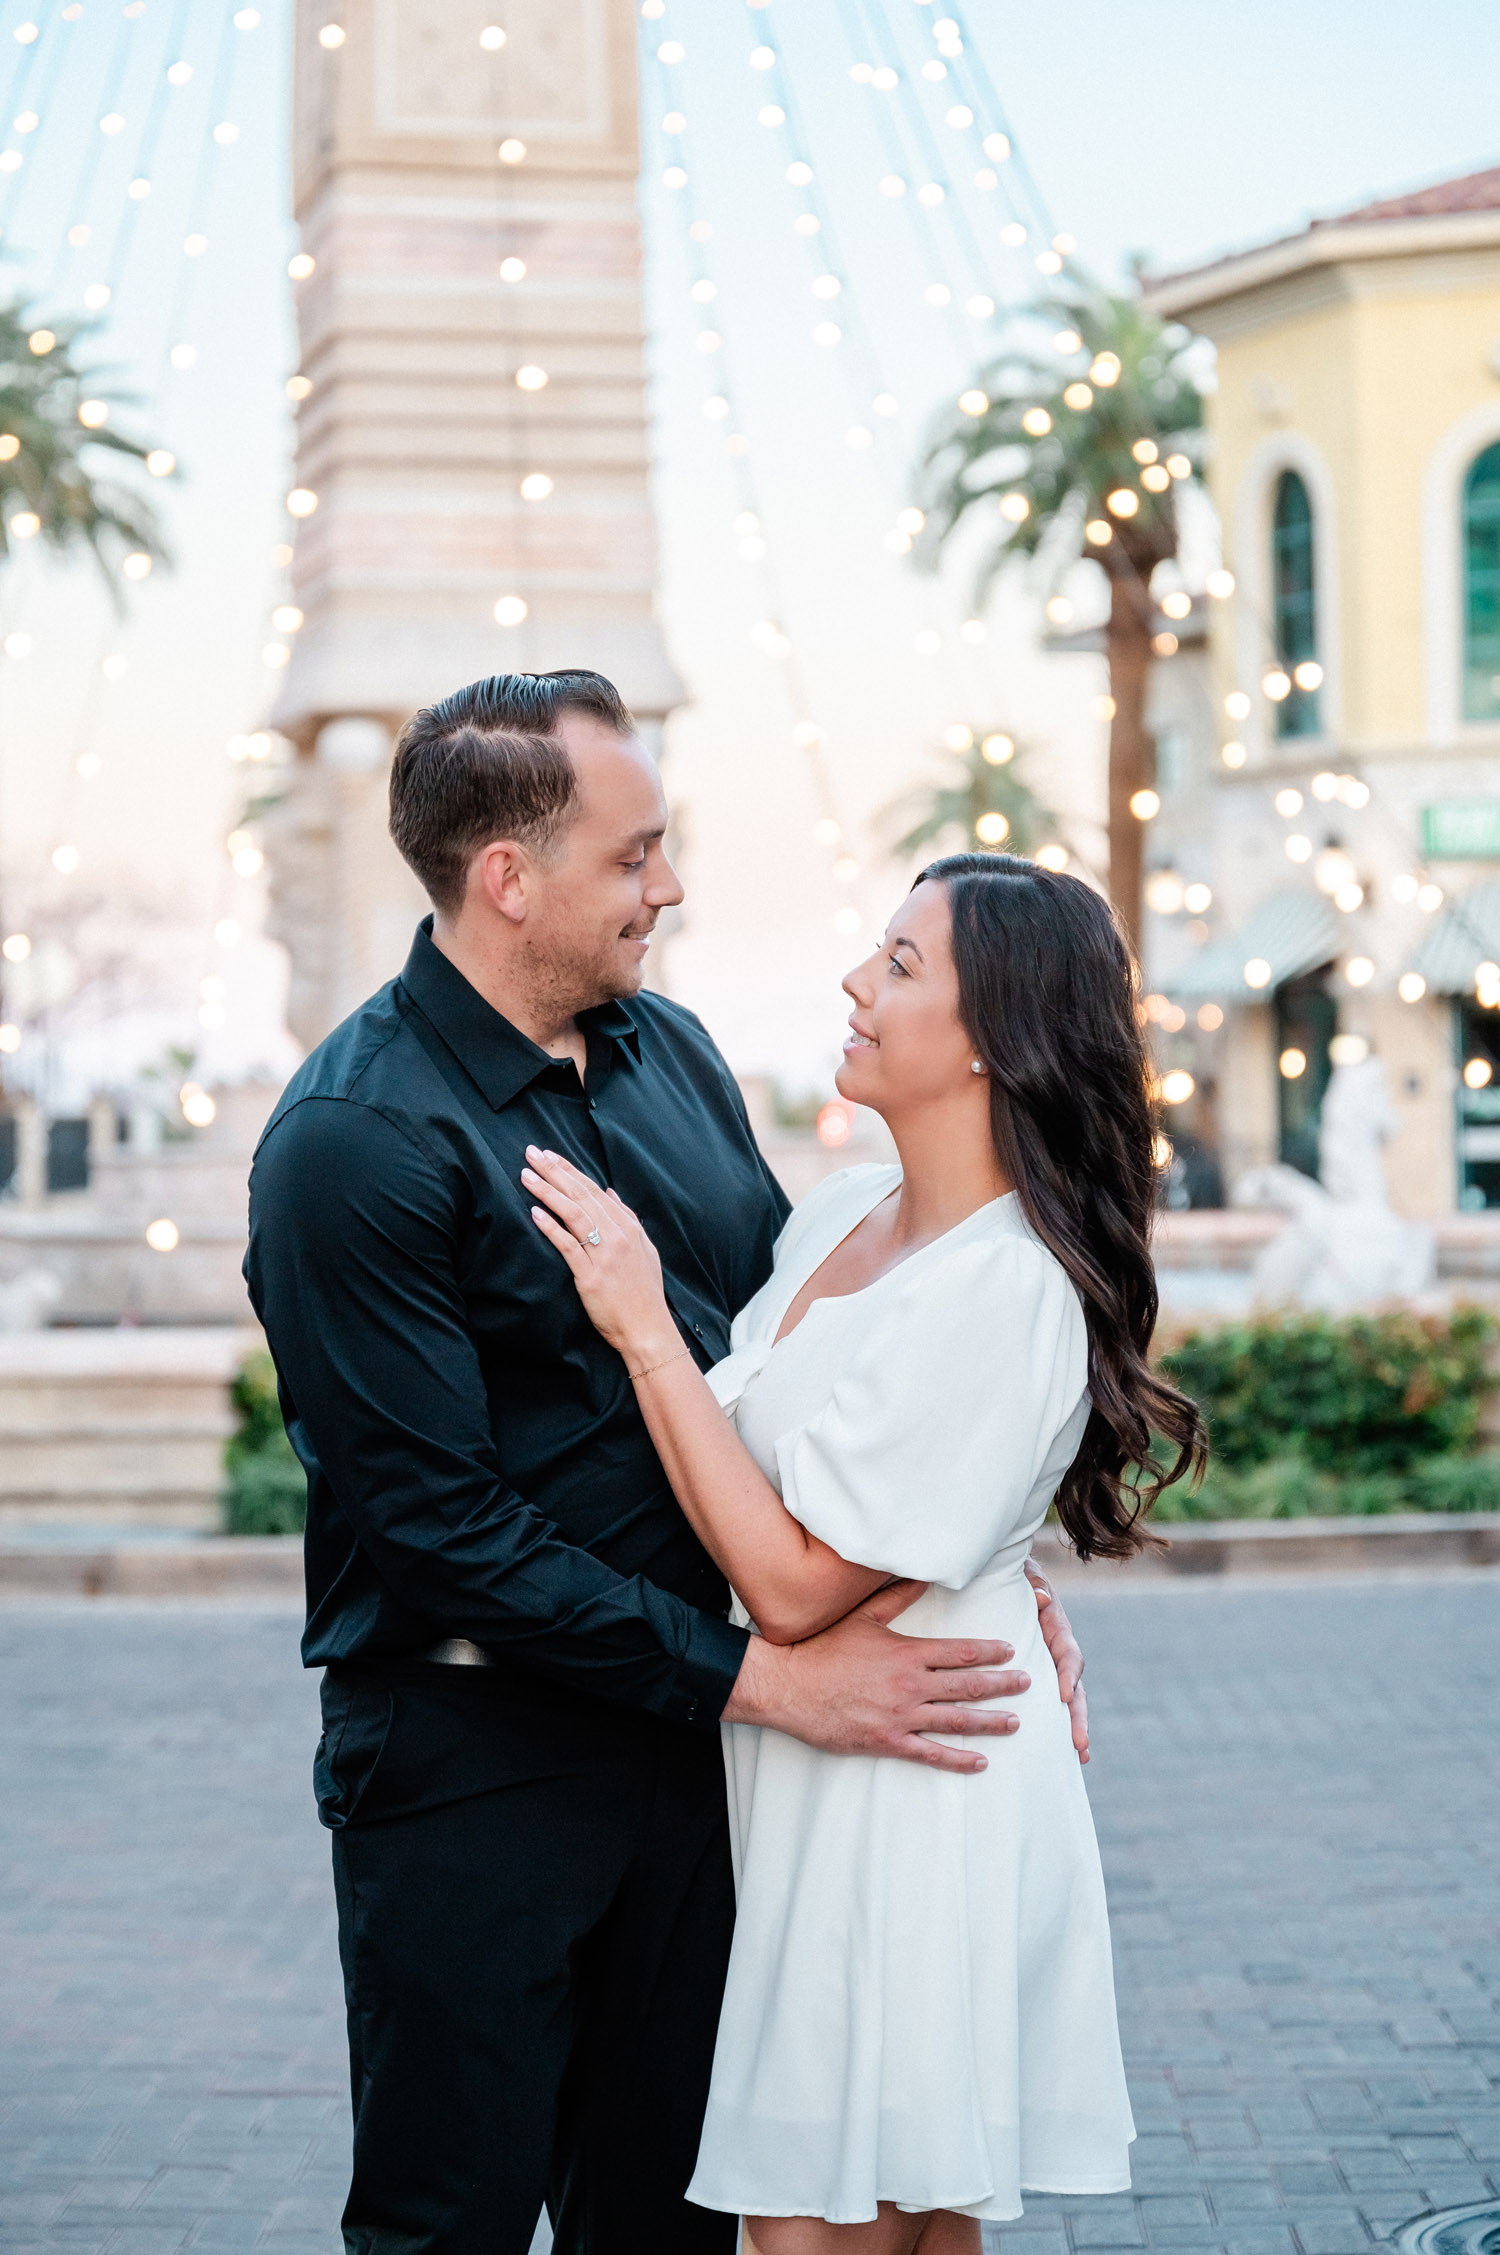 Tivoli Village Engagement Session | Kristen Marie Weddings Portraits, Las Vegas Wedding Photographer